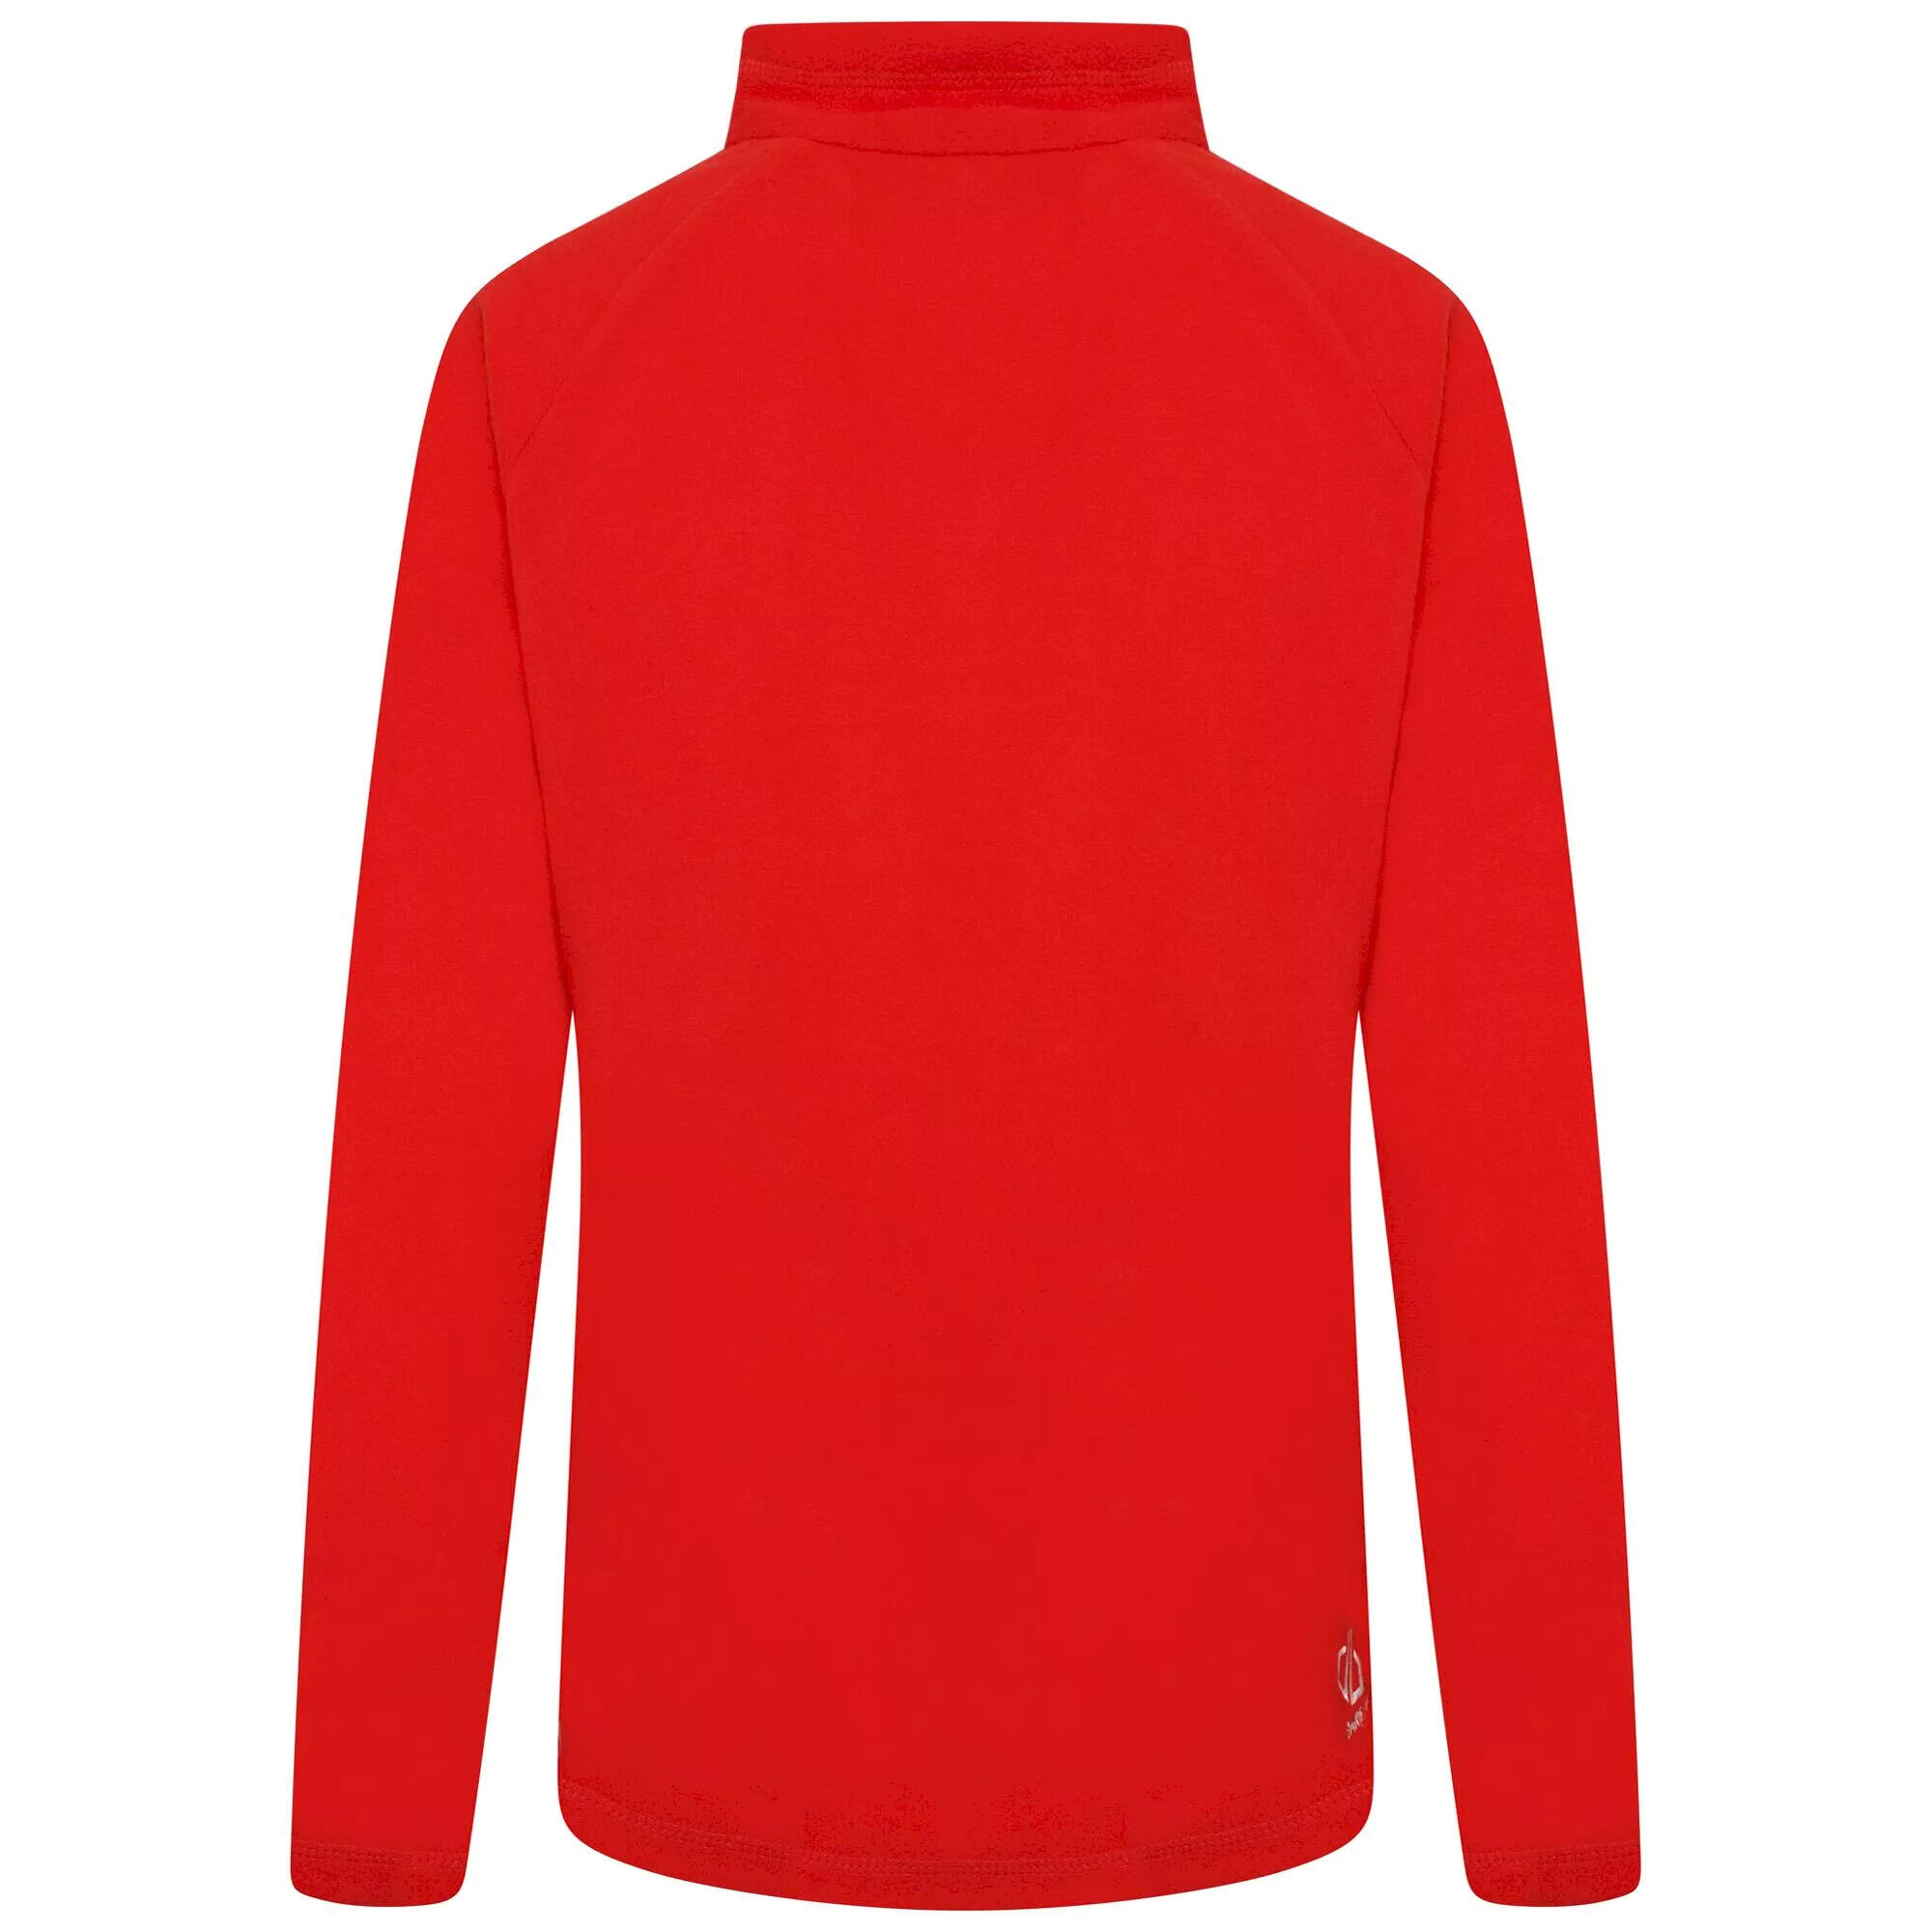 Womens/Ladies Freeform II Fleece (Volcanic Red) 2/4